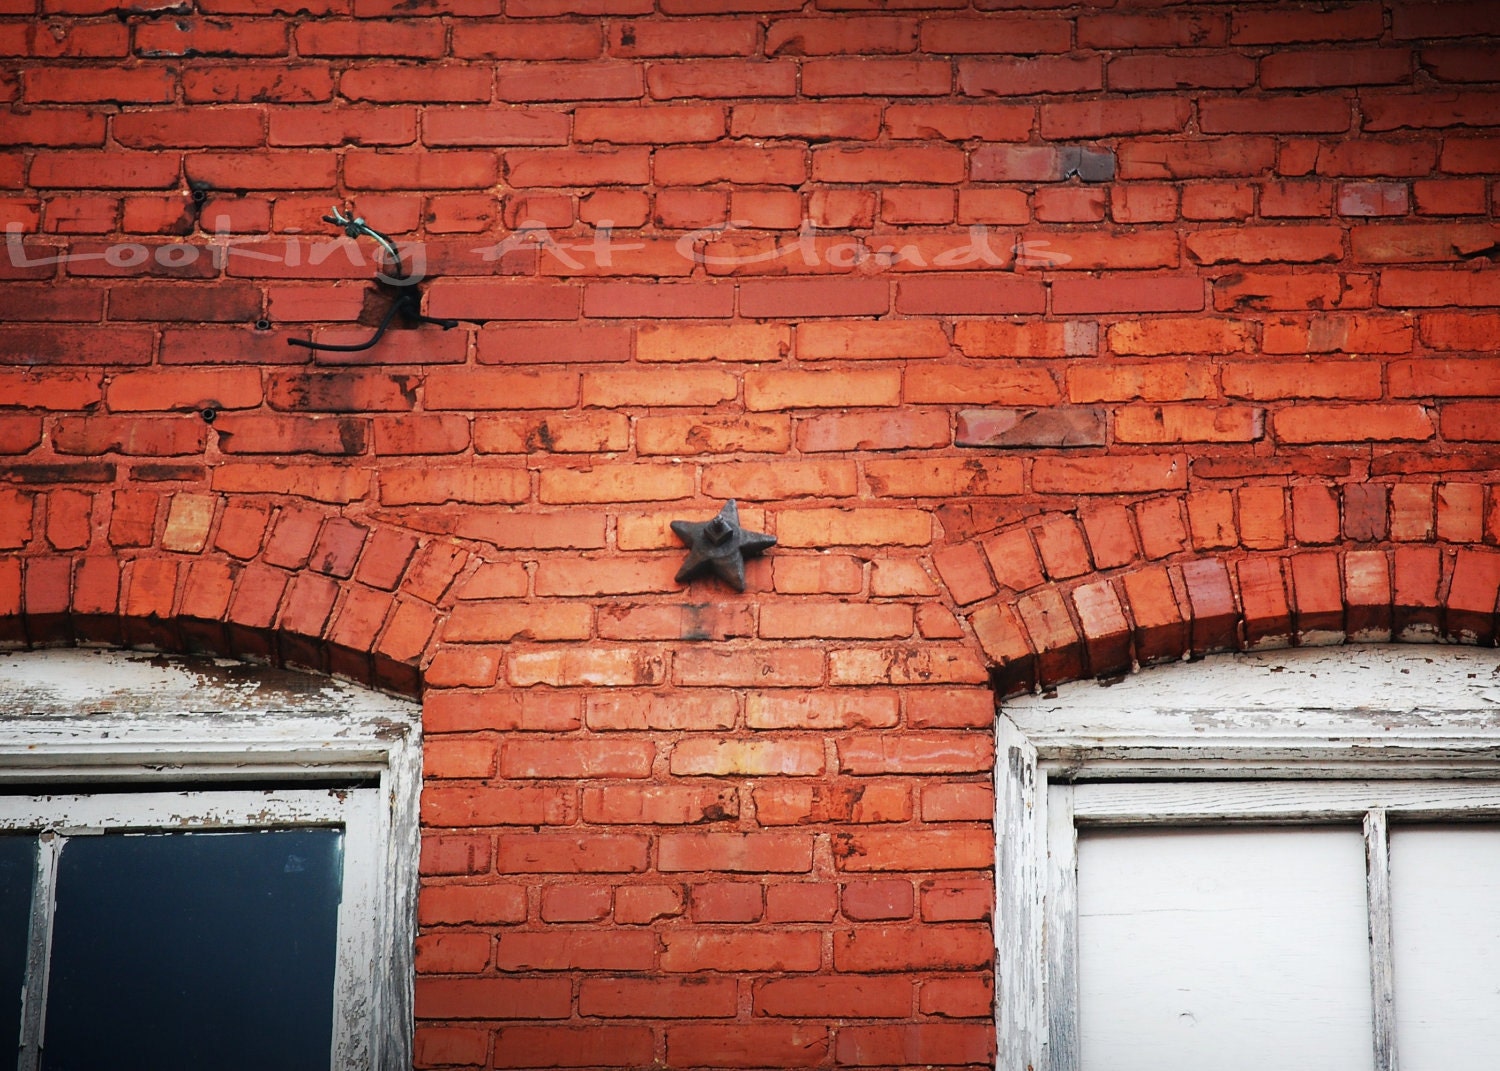 orange brick building with an iron star architectural element windows 5 x 7 fine art photograph